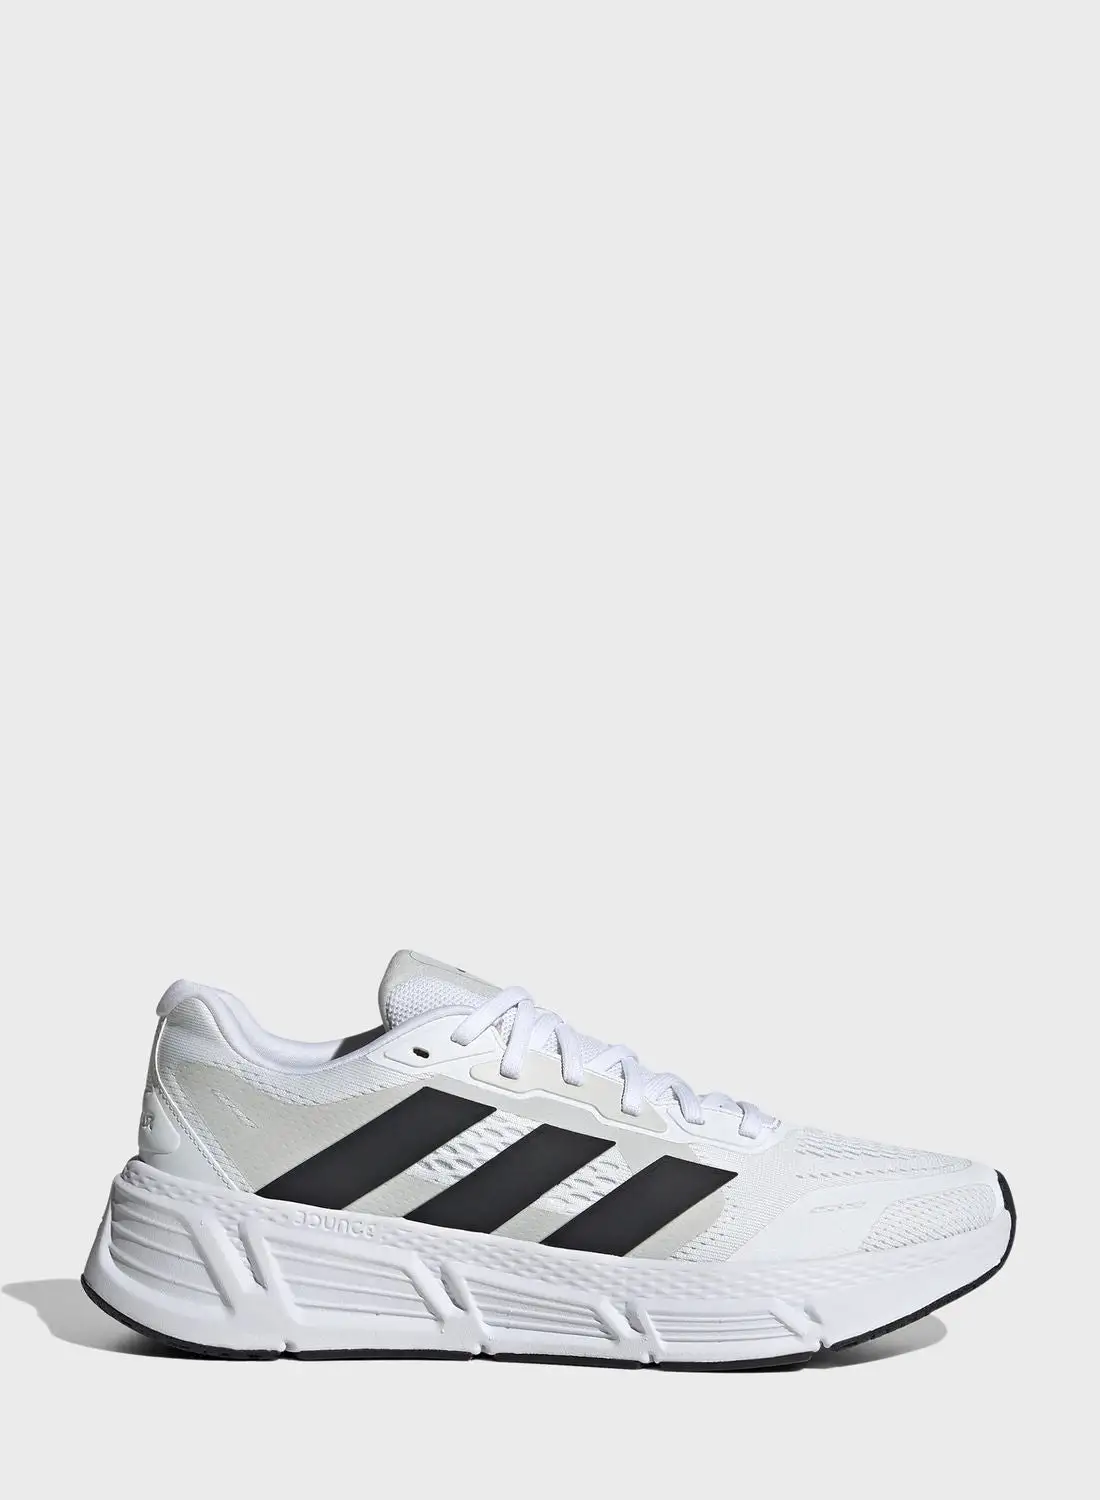 Adidas Questar 2 Shoes